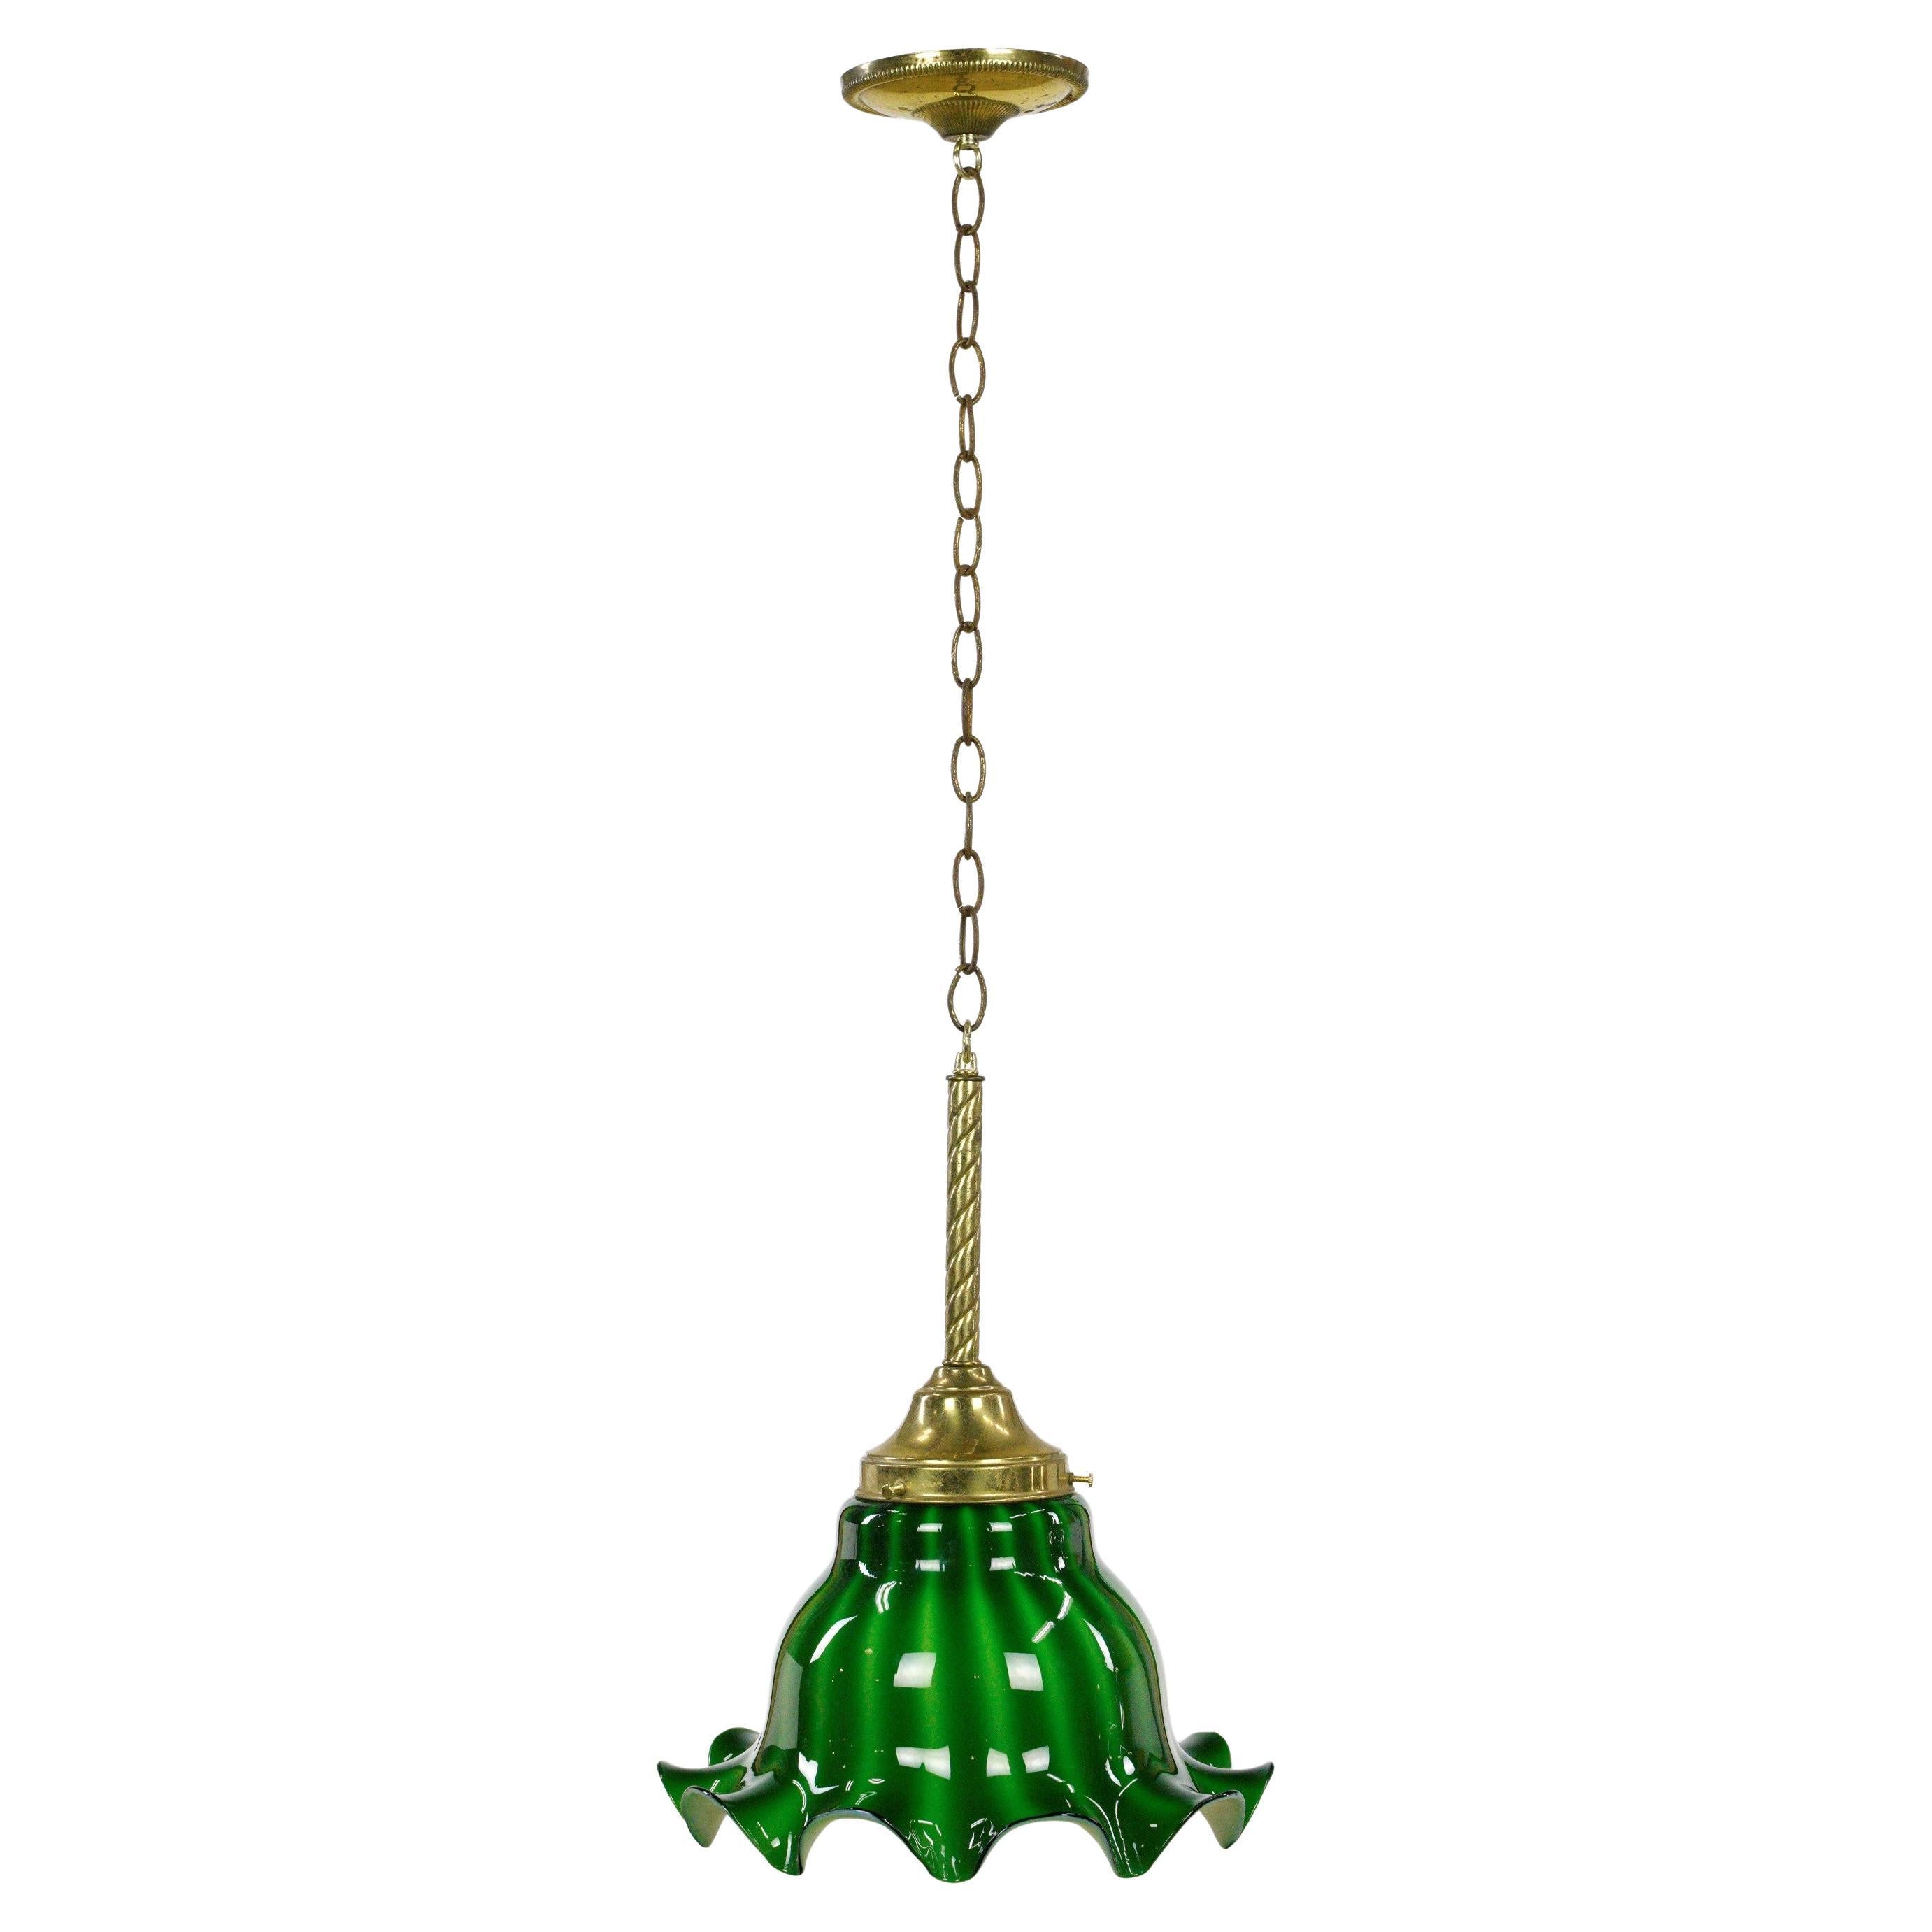 Brass Chain Ruffled Green Glass Shade Pendant Light For Sale